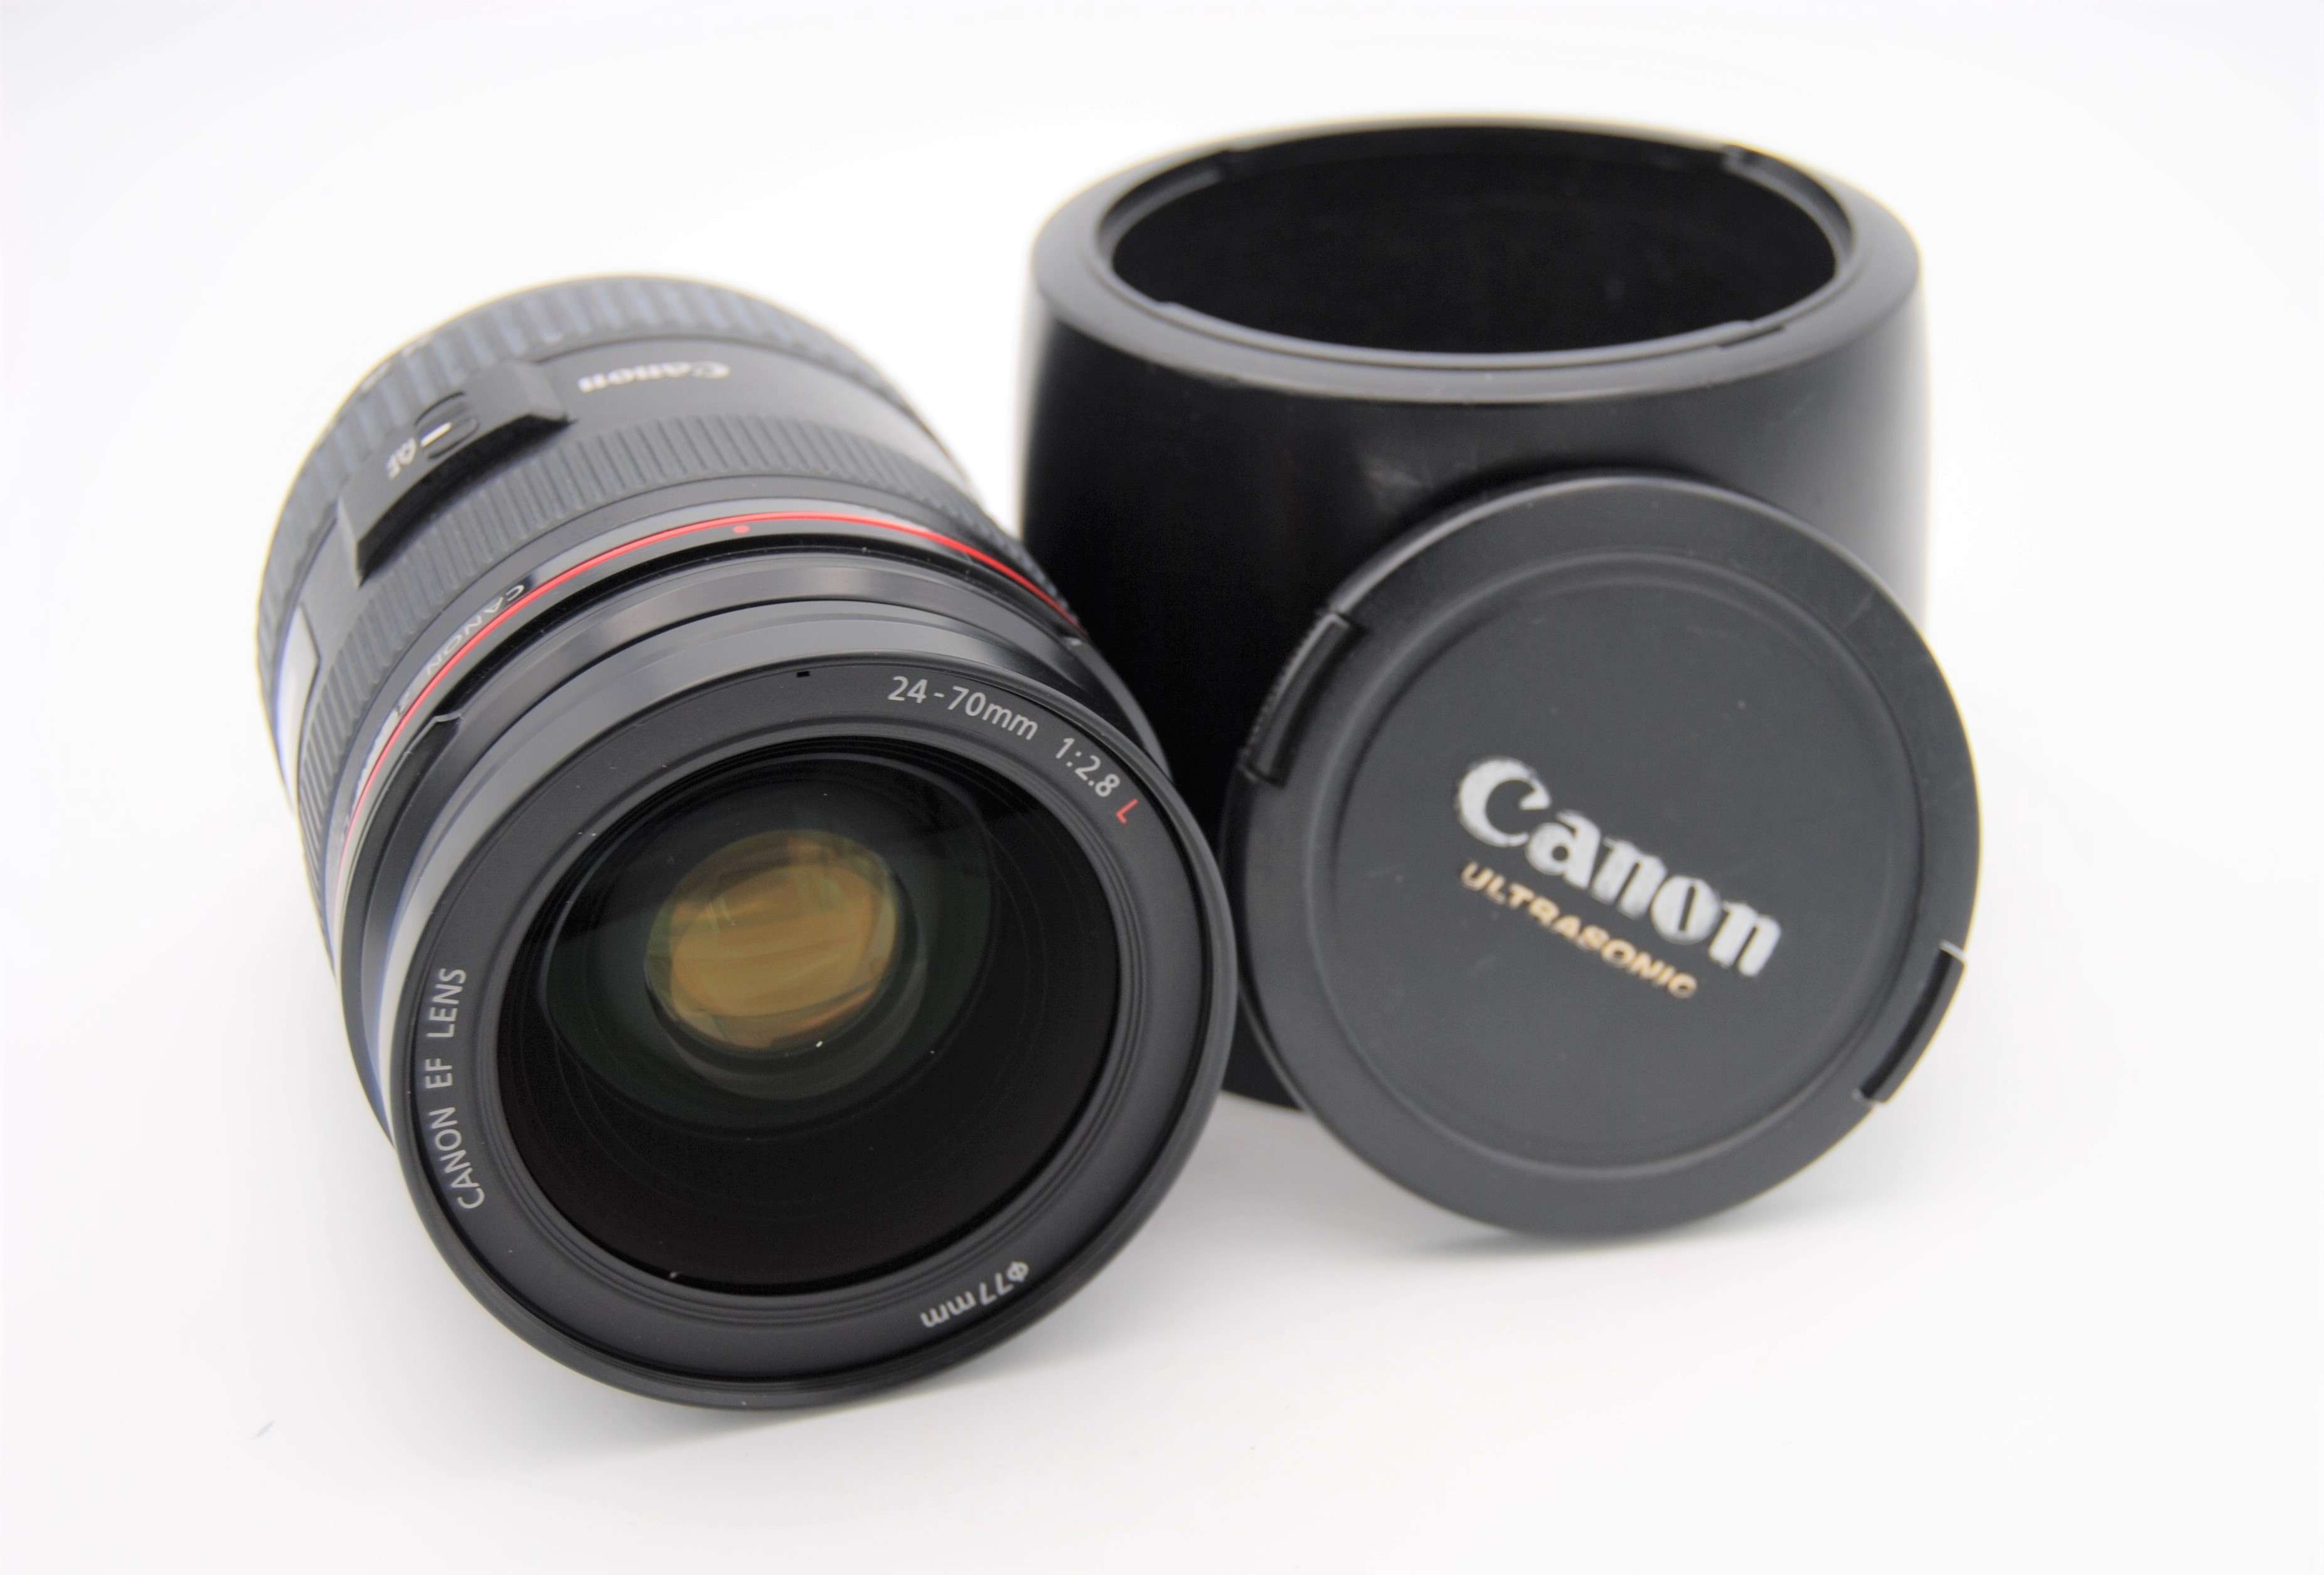 Canon ULTRASONIC EF 24-70mm f/2.8L USM ZOOM LENS | eBay